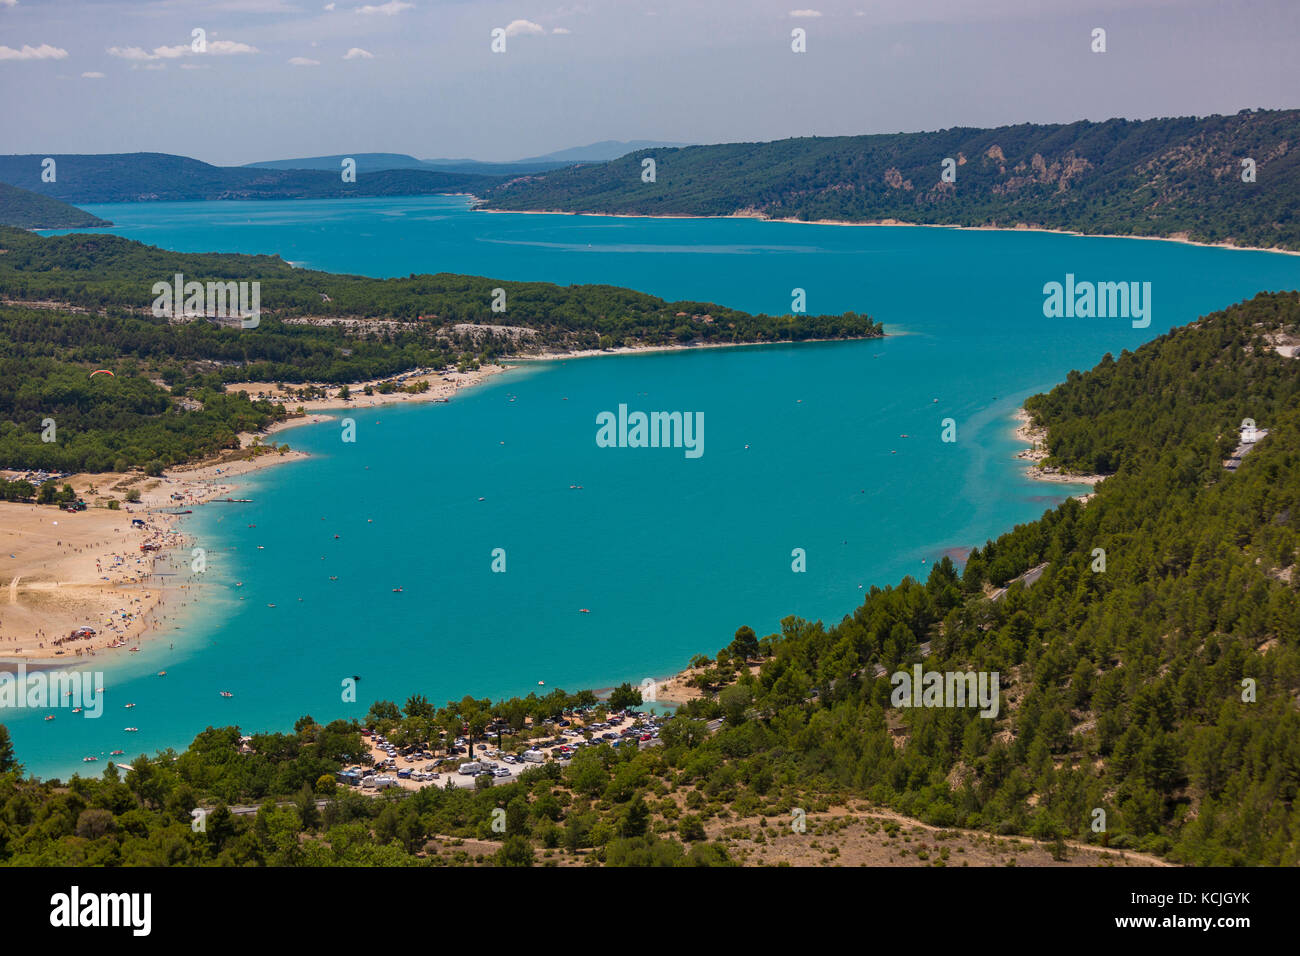 LAKE OF SAINTE-CROIX, PROVENCE, FRANCE - Man-made lake, lac de Sainte-Croix. Stock Photo